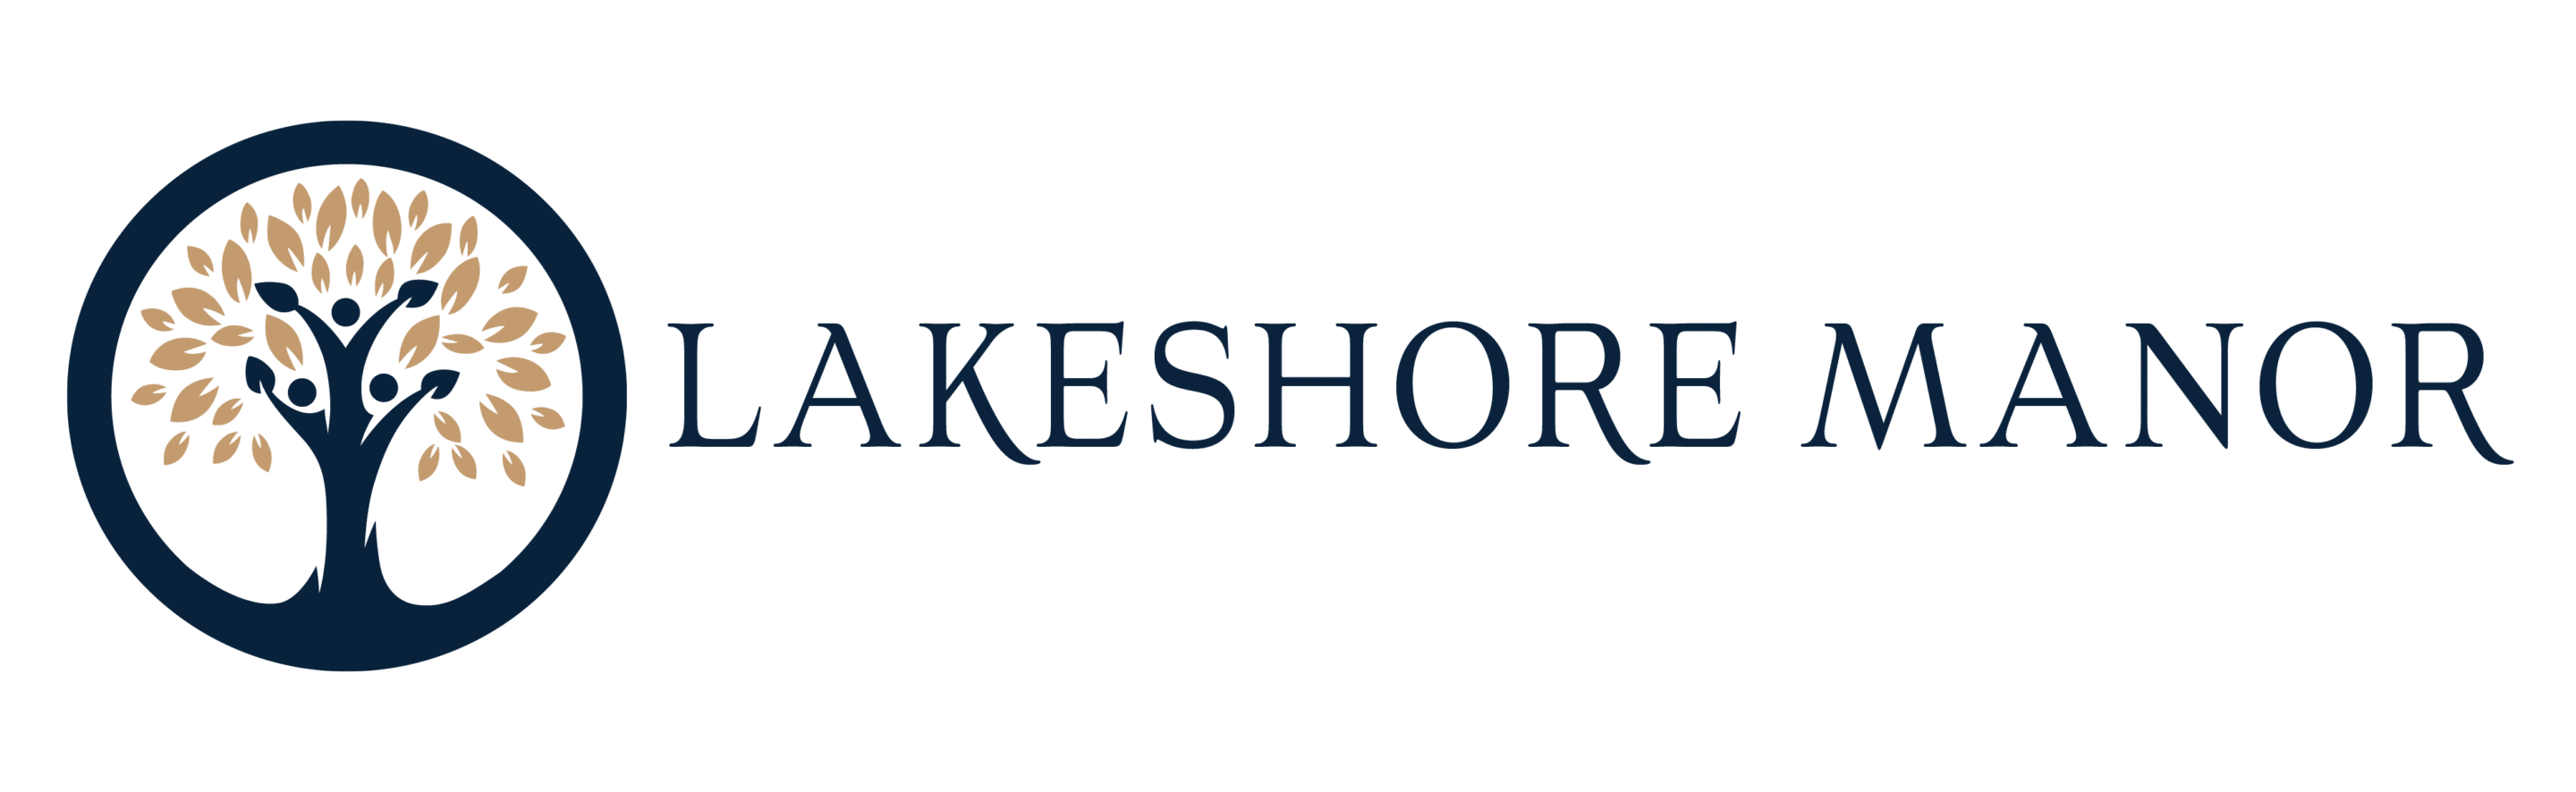 lakeshore manor memory care pms color logo